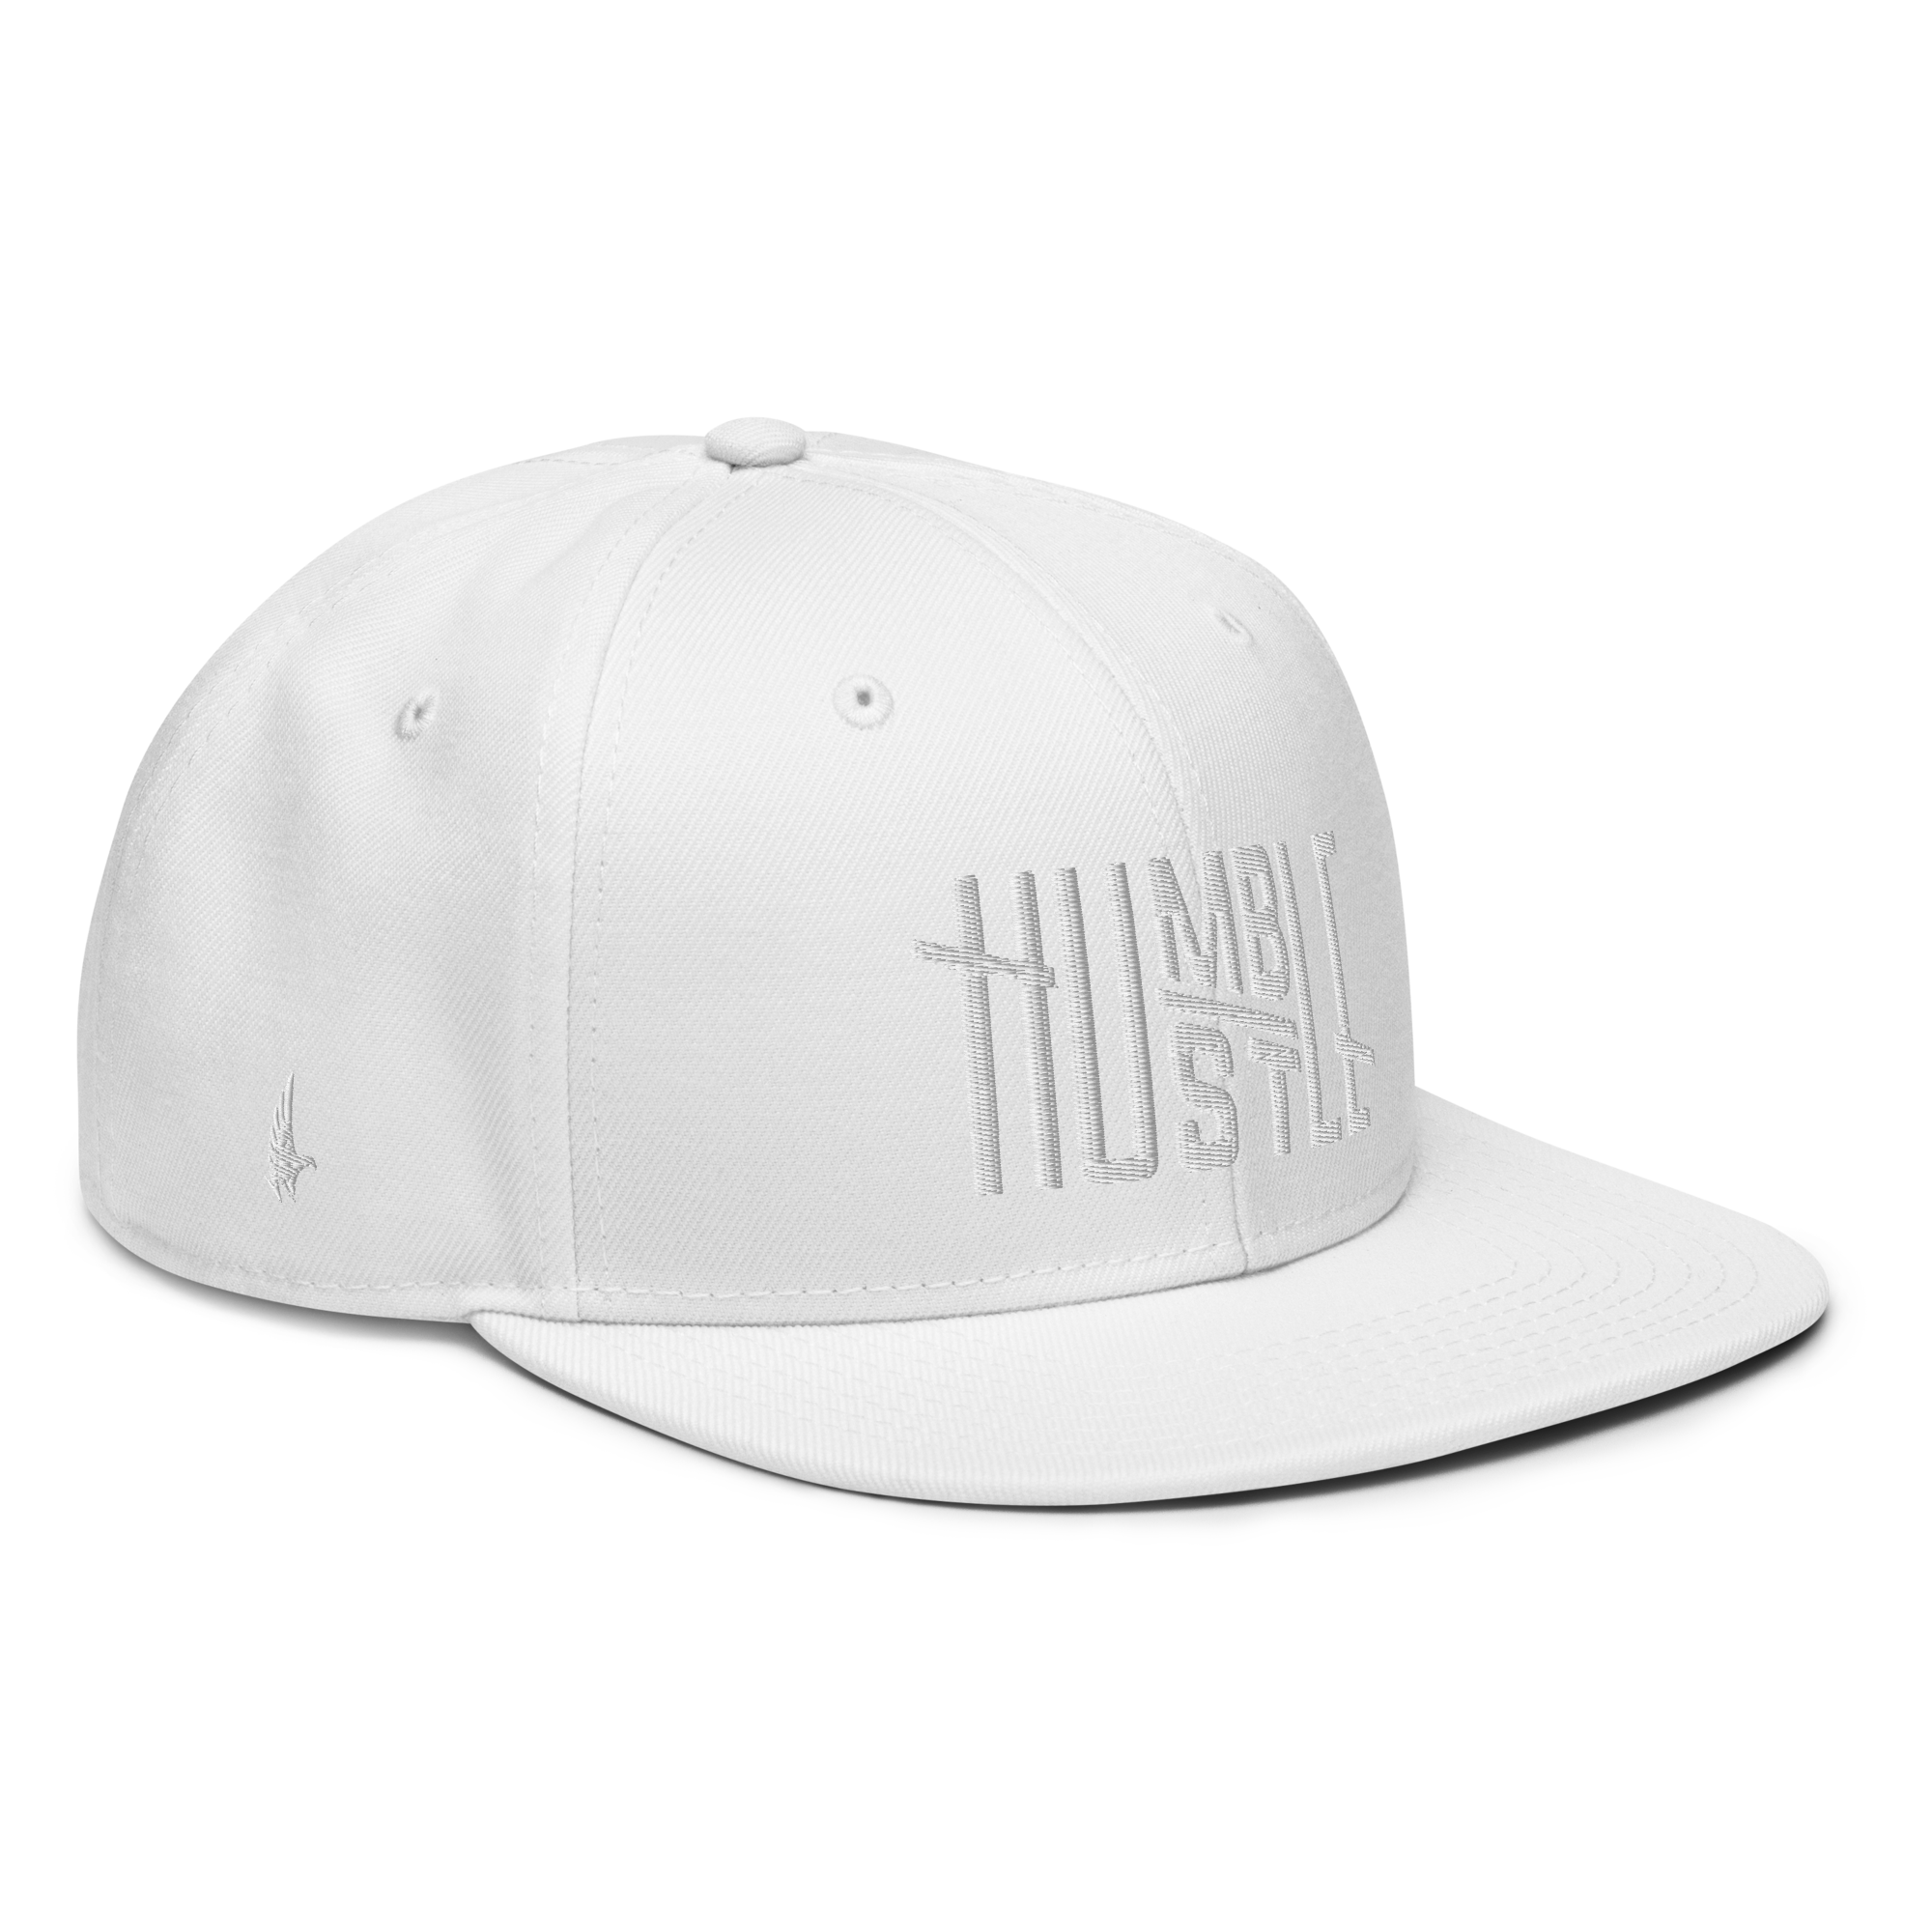 Humble Hustle Snapback Hat - White/White OS - Loyalty Vibes